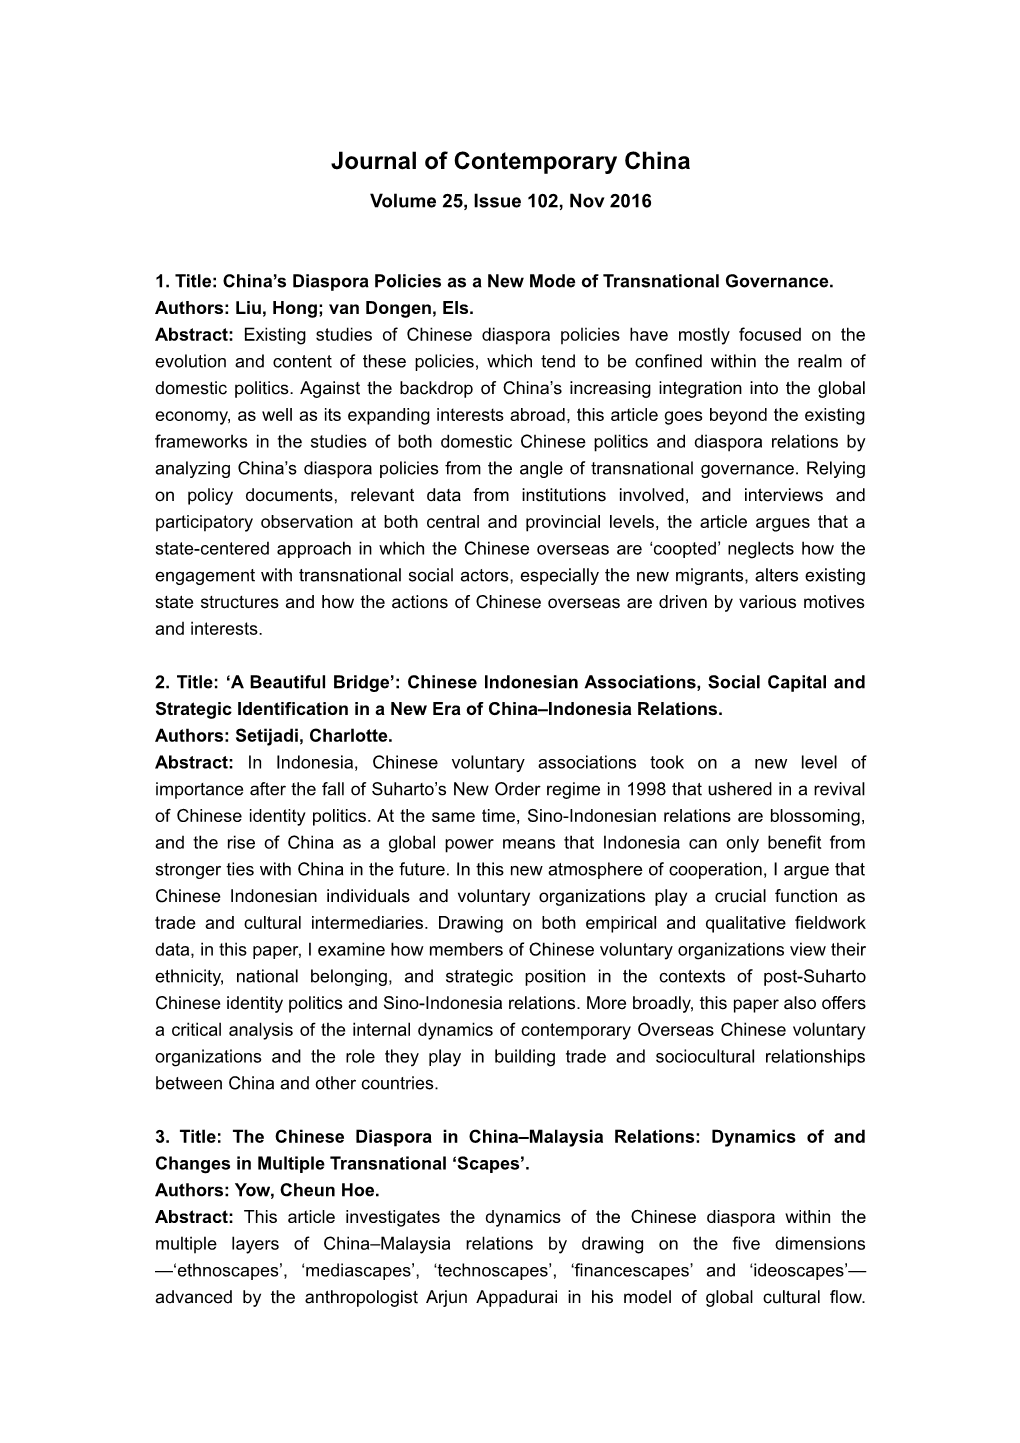 1. Title: China S Diaspora Policies As a New Mode of Transnational Governance